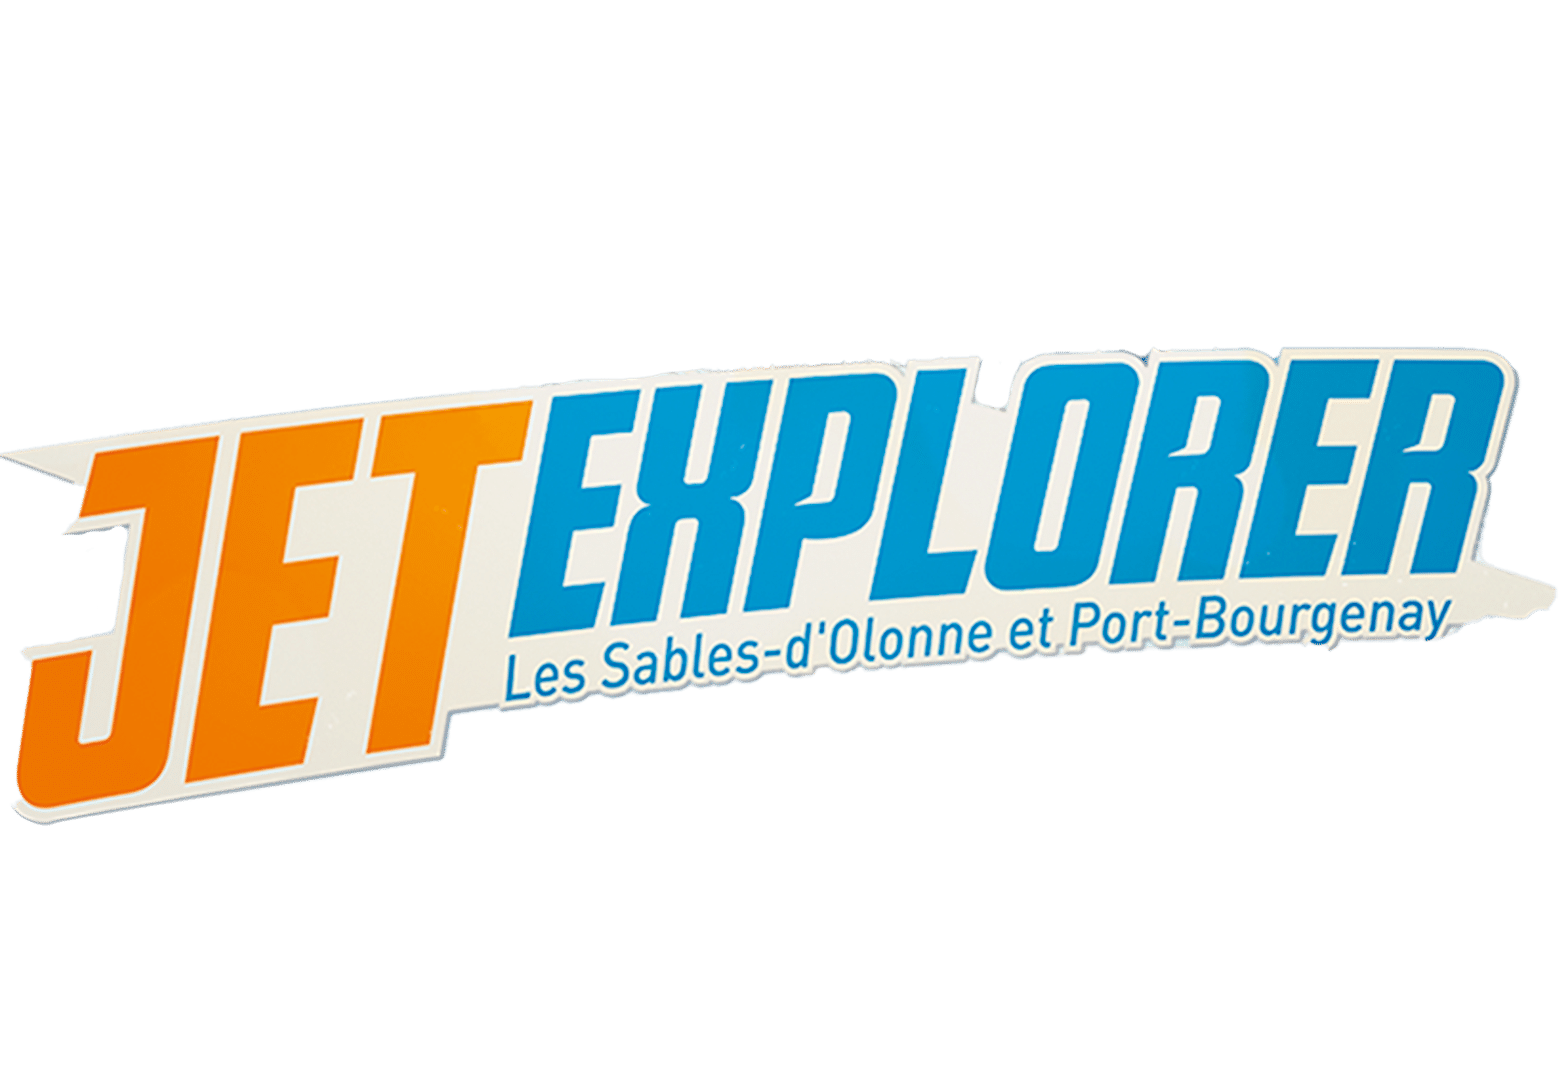 Jet-explorer